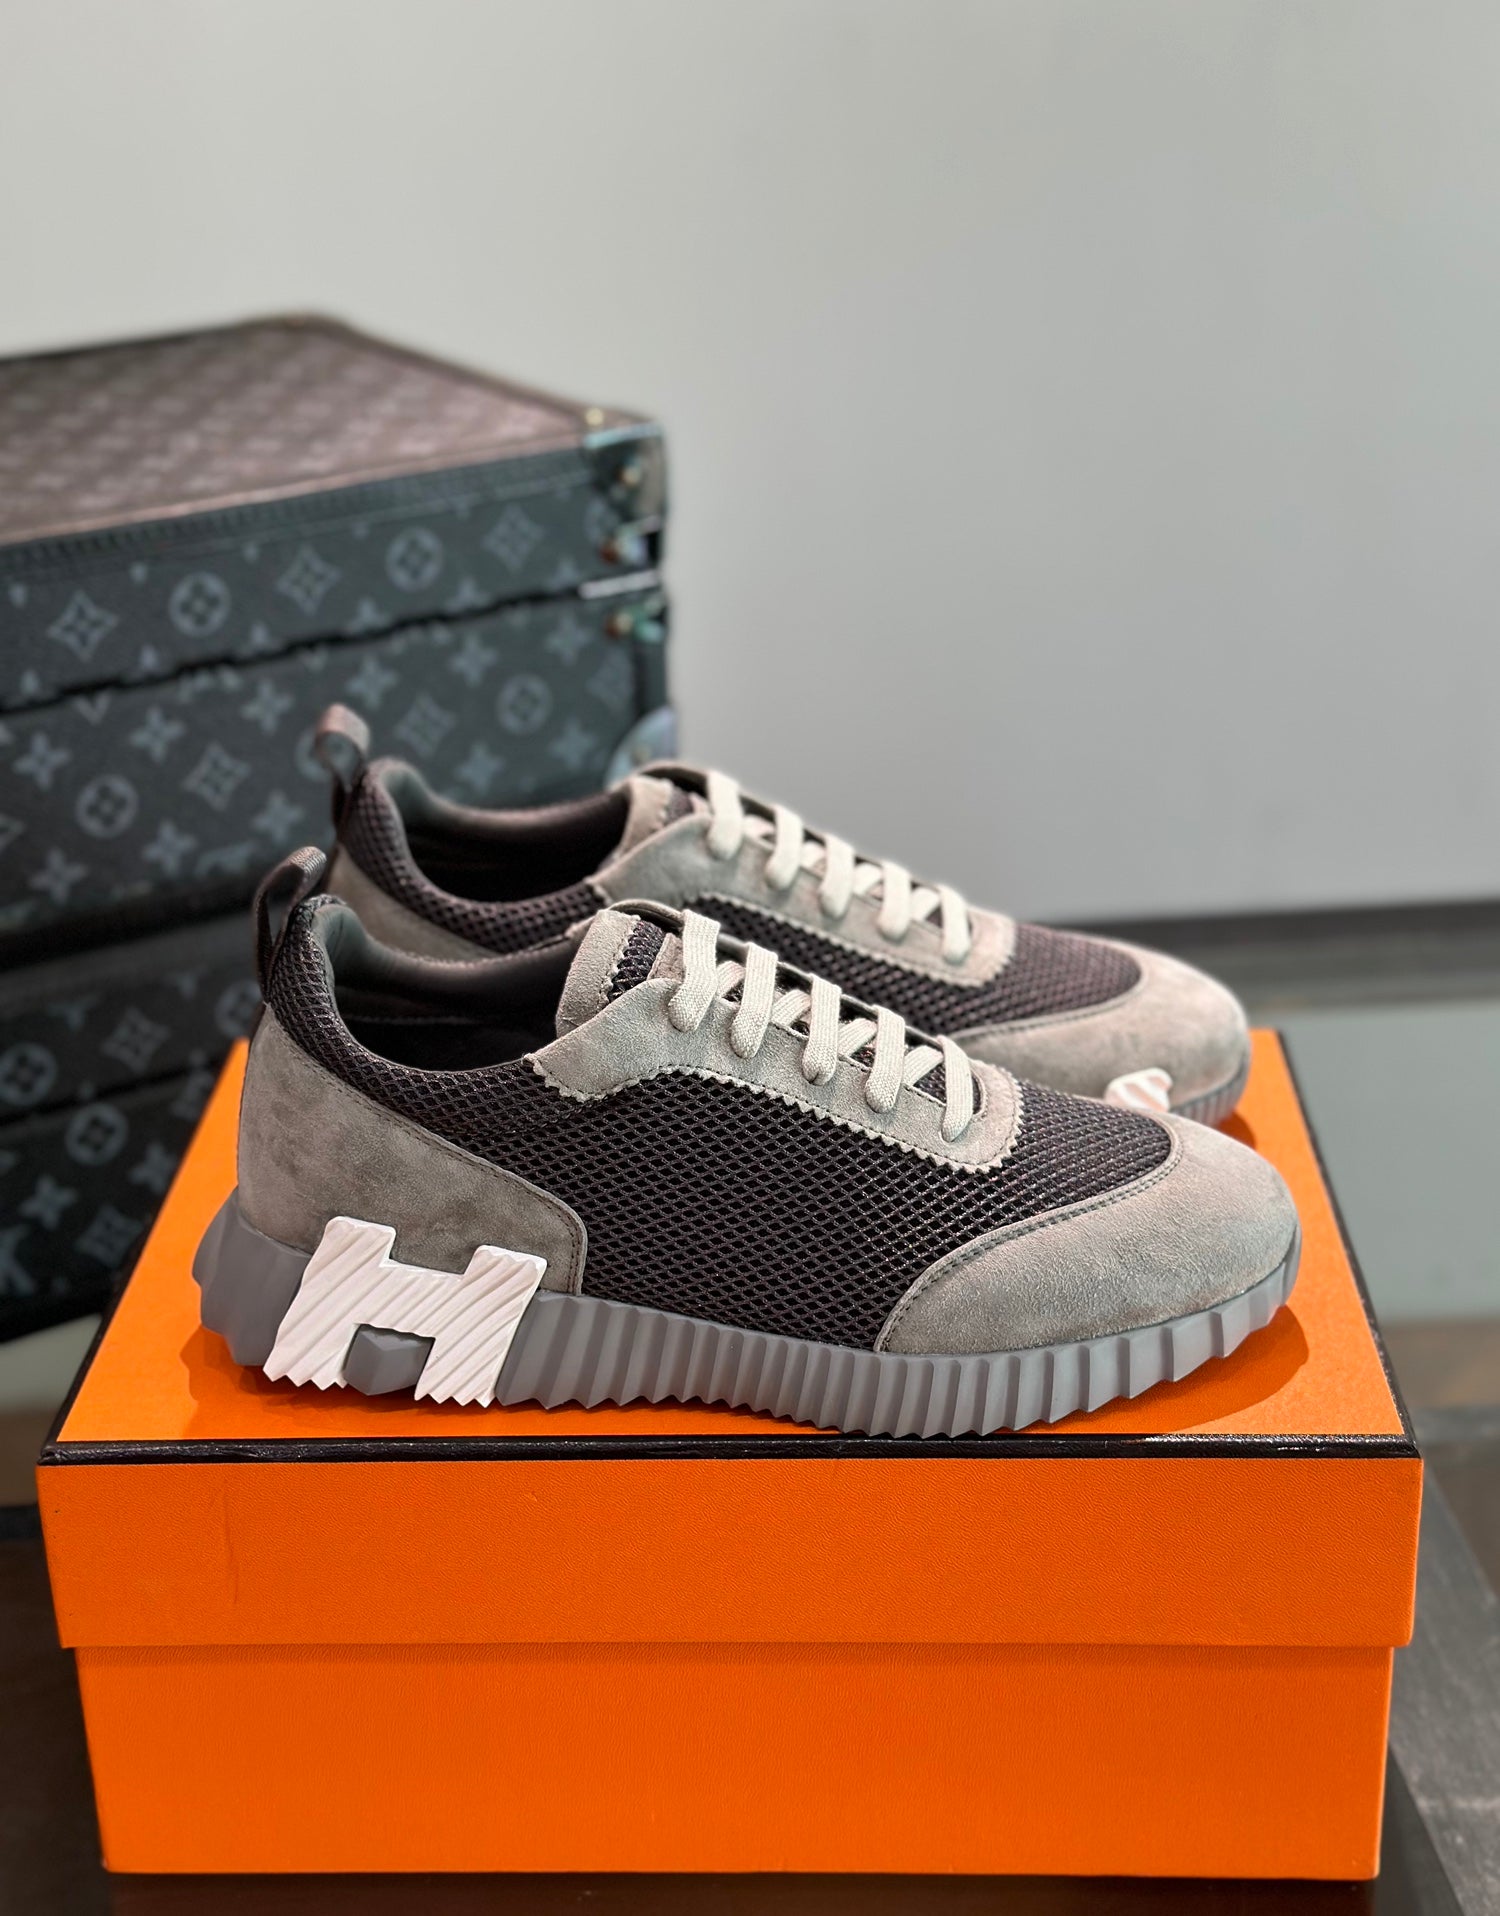 Herm Sneakers